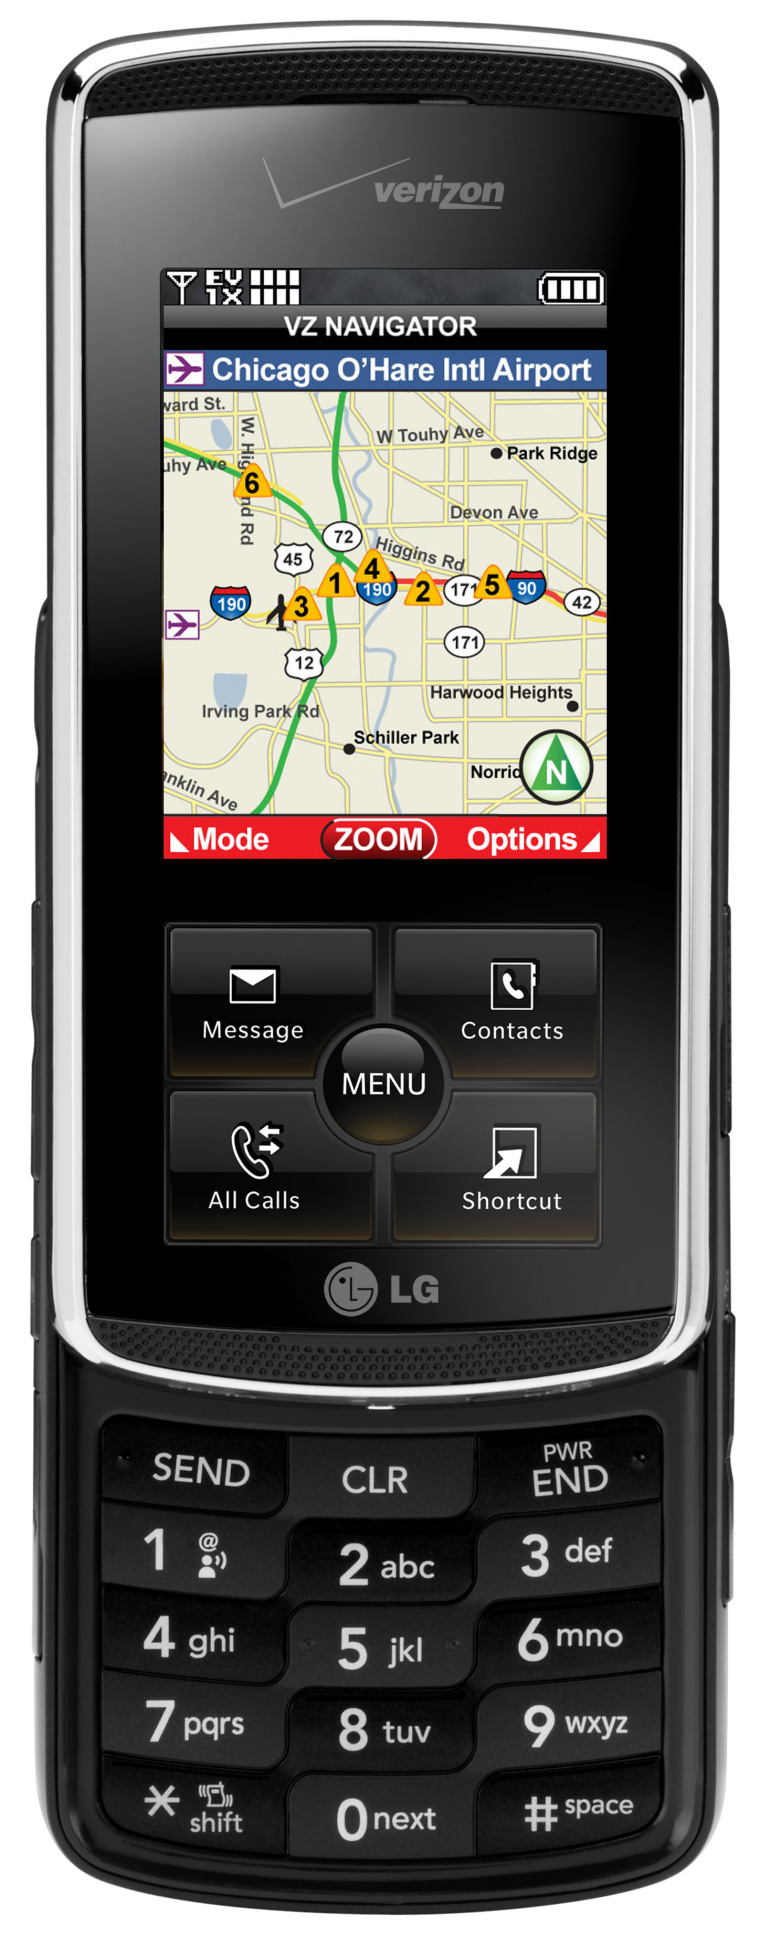 Image: Verizon Wireless' VZ Navigation software on phone